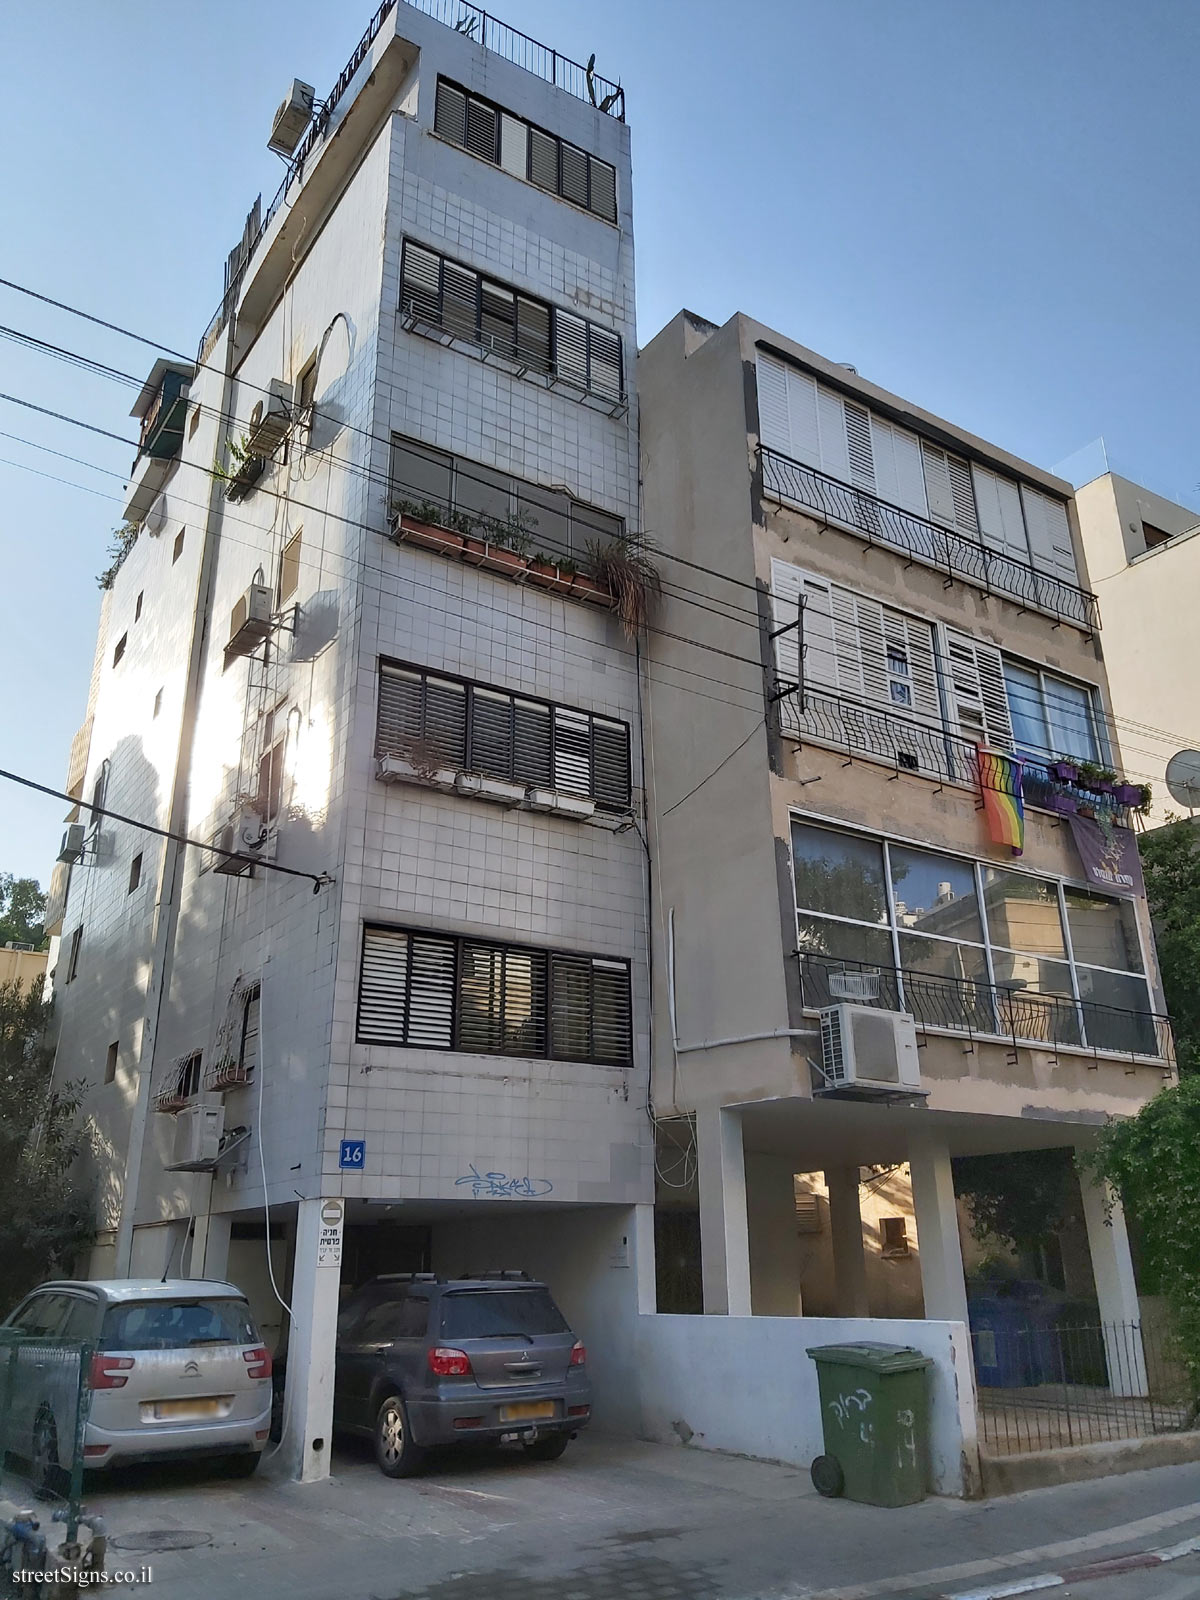 The house of Benny Amdursky - Tsvi Brock St 16, Tel Aviv-Yafo, Israel